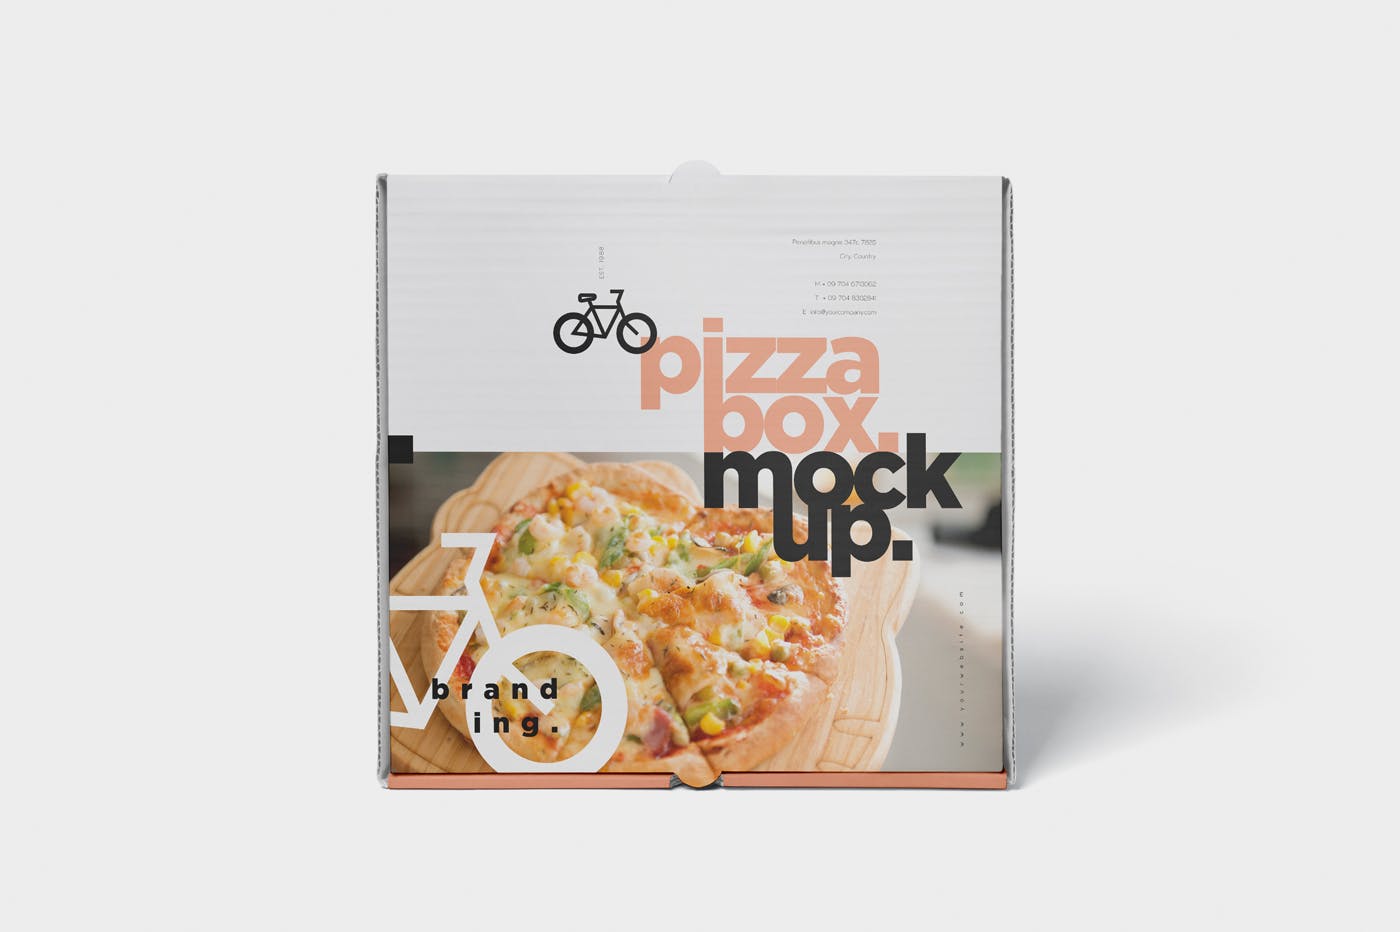 披萨外带包装纸盒设计图样机 Pizza Box Mock-Up – Grocery Store Edition插图(3)